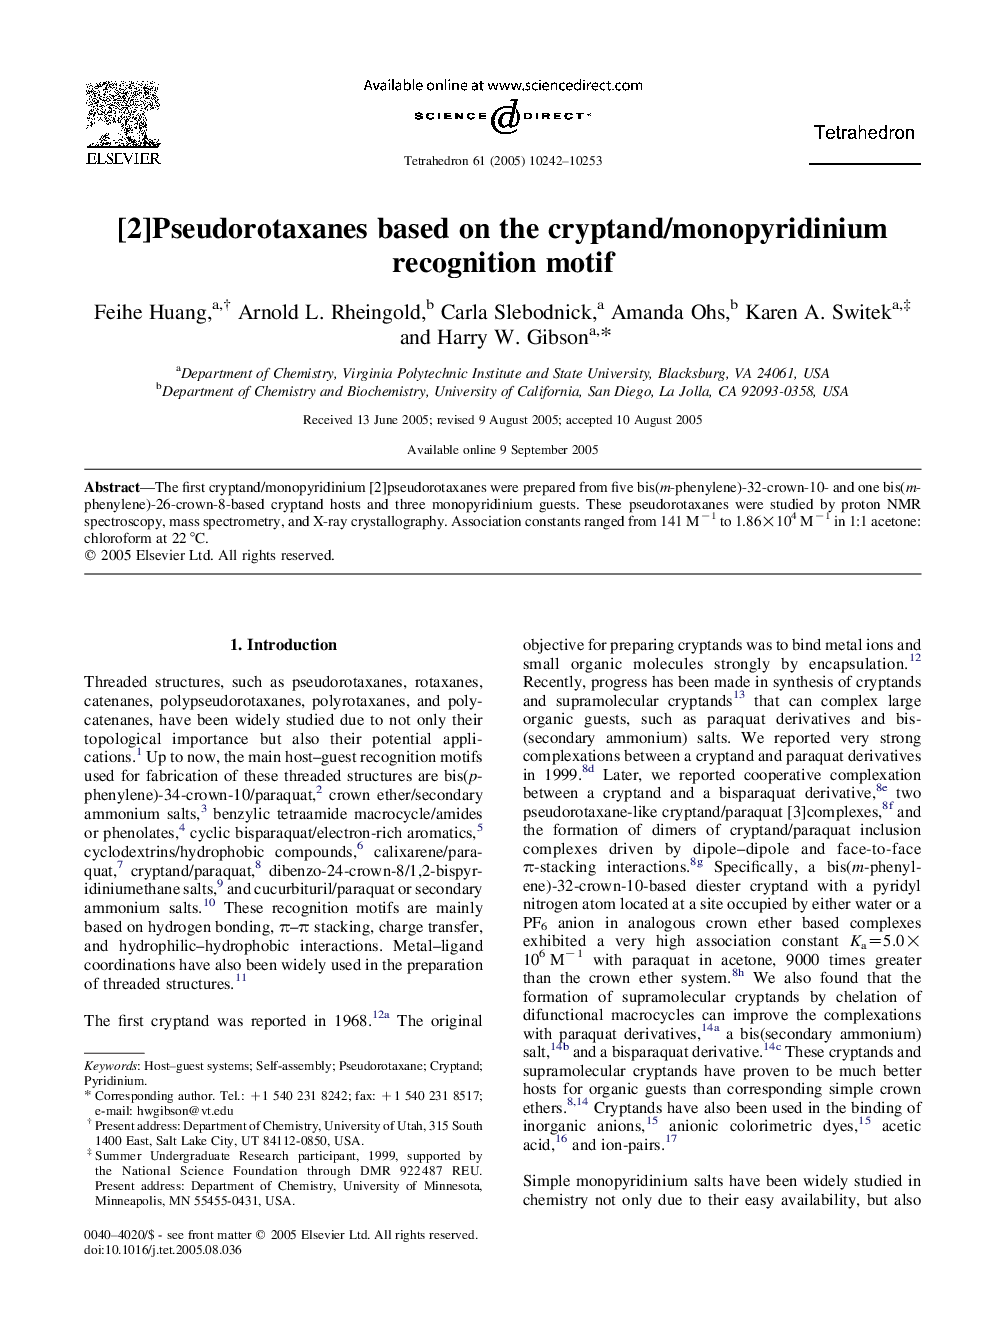 [2]Pseudorotaxanes based on the cryptand/monopyridinium recognition motif